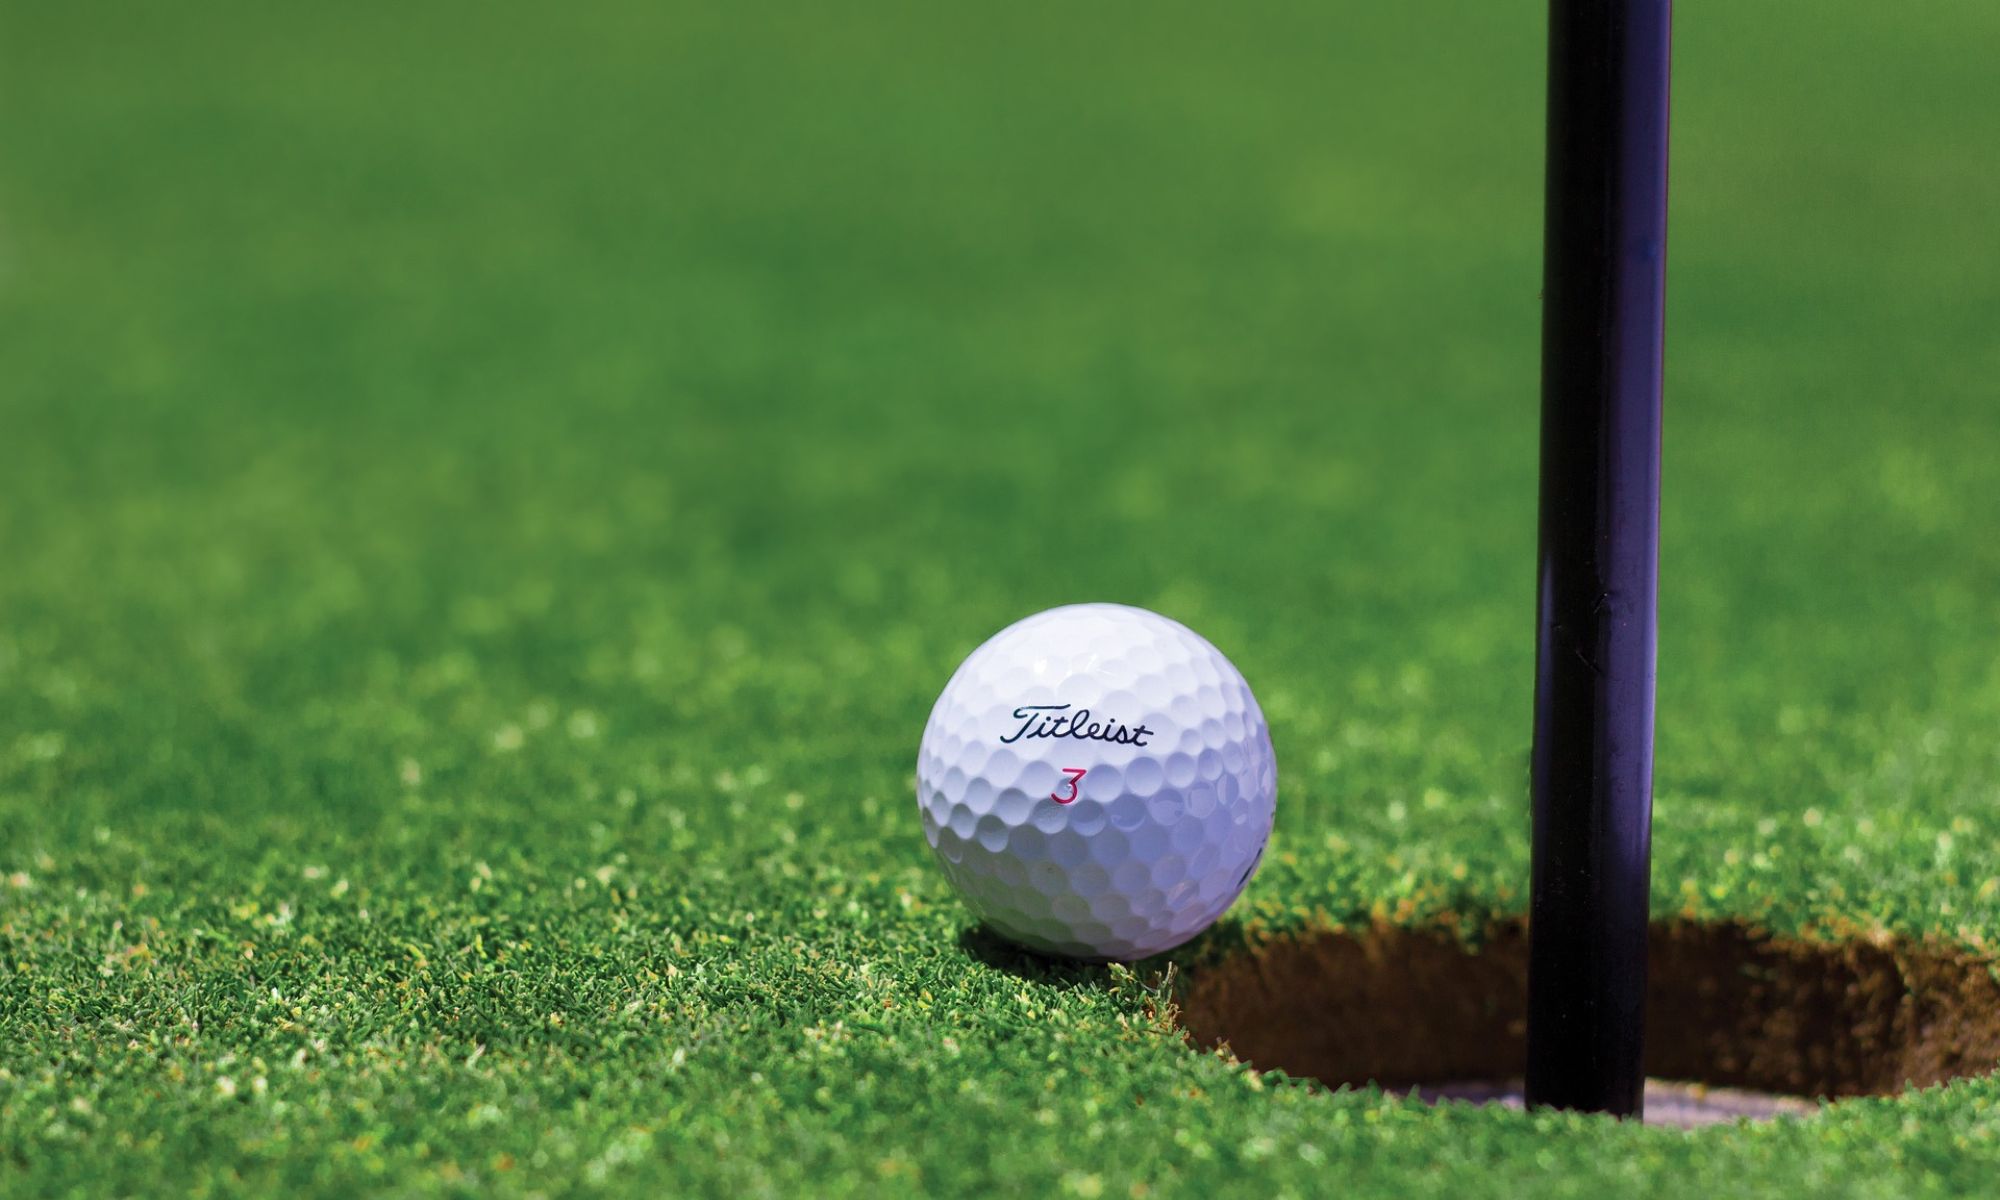 Golfball near the hole